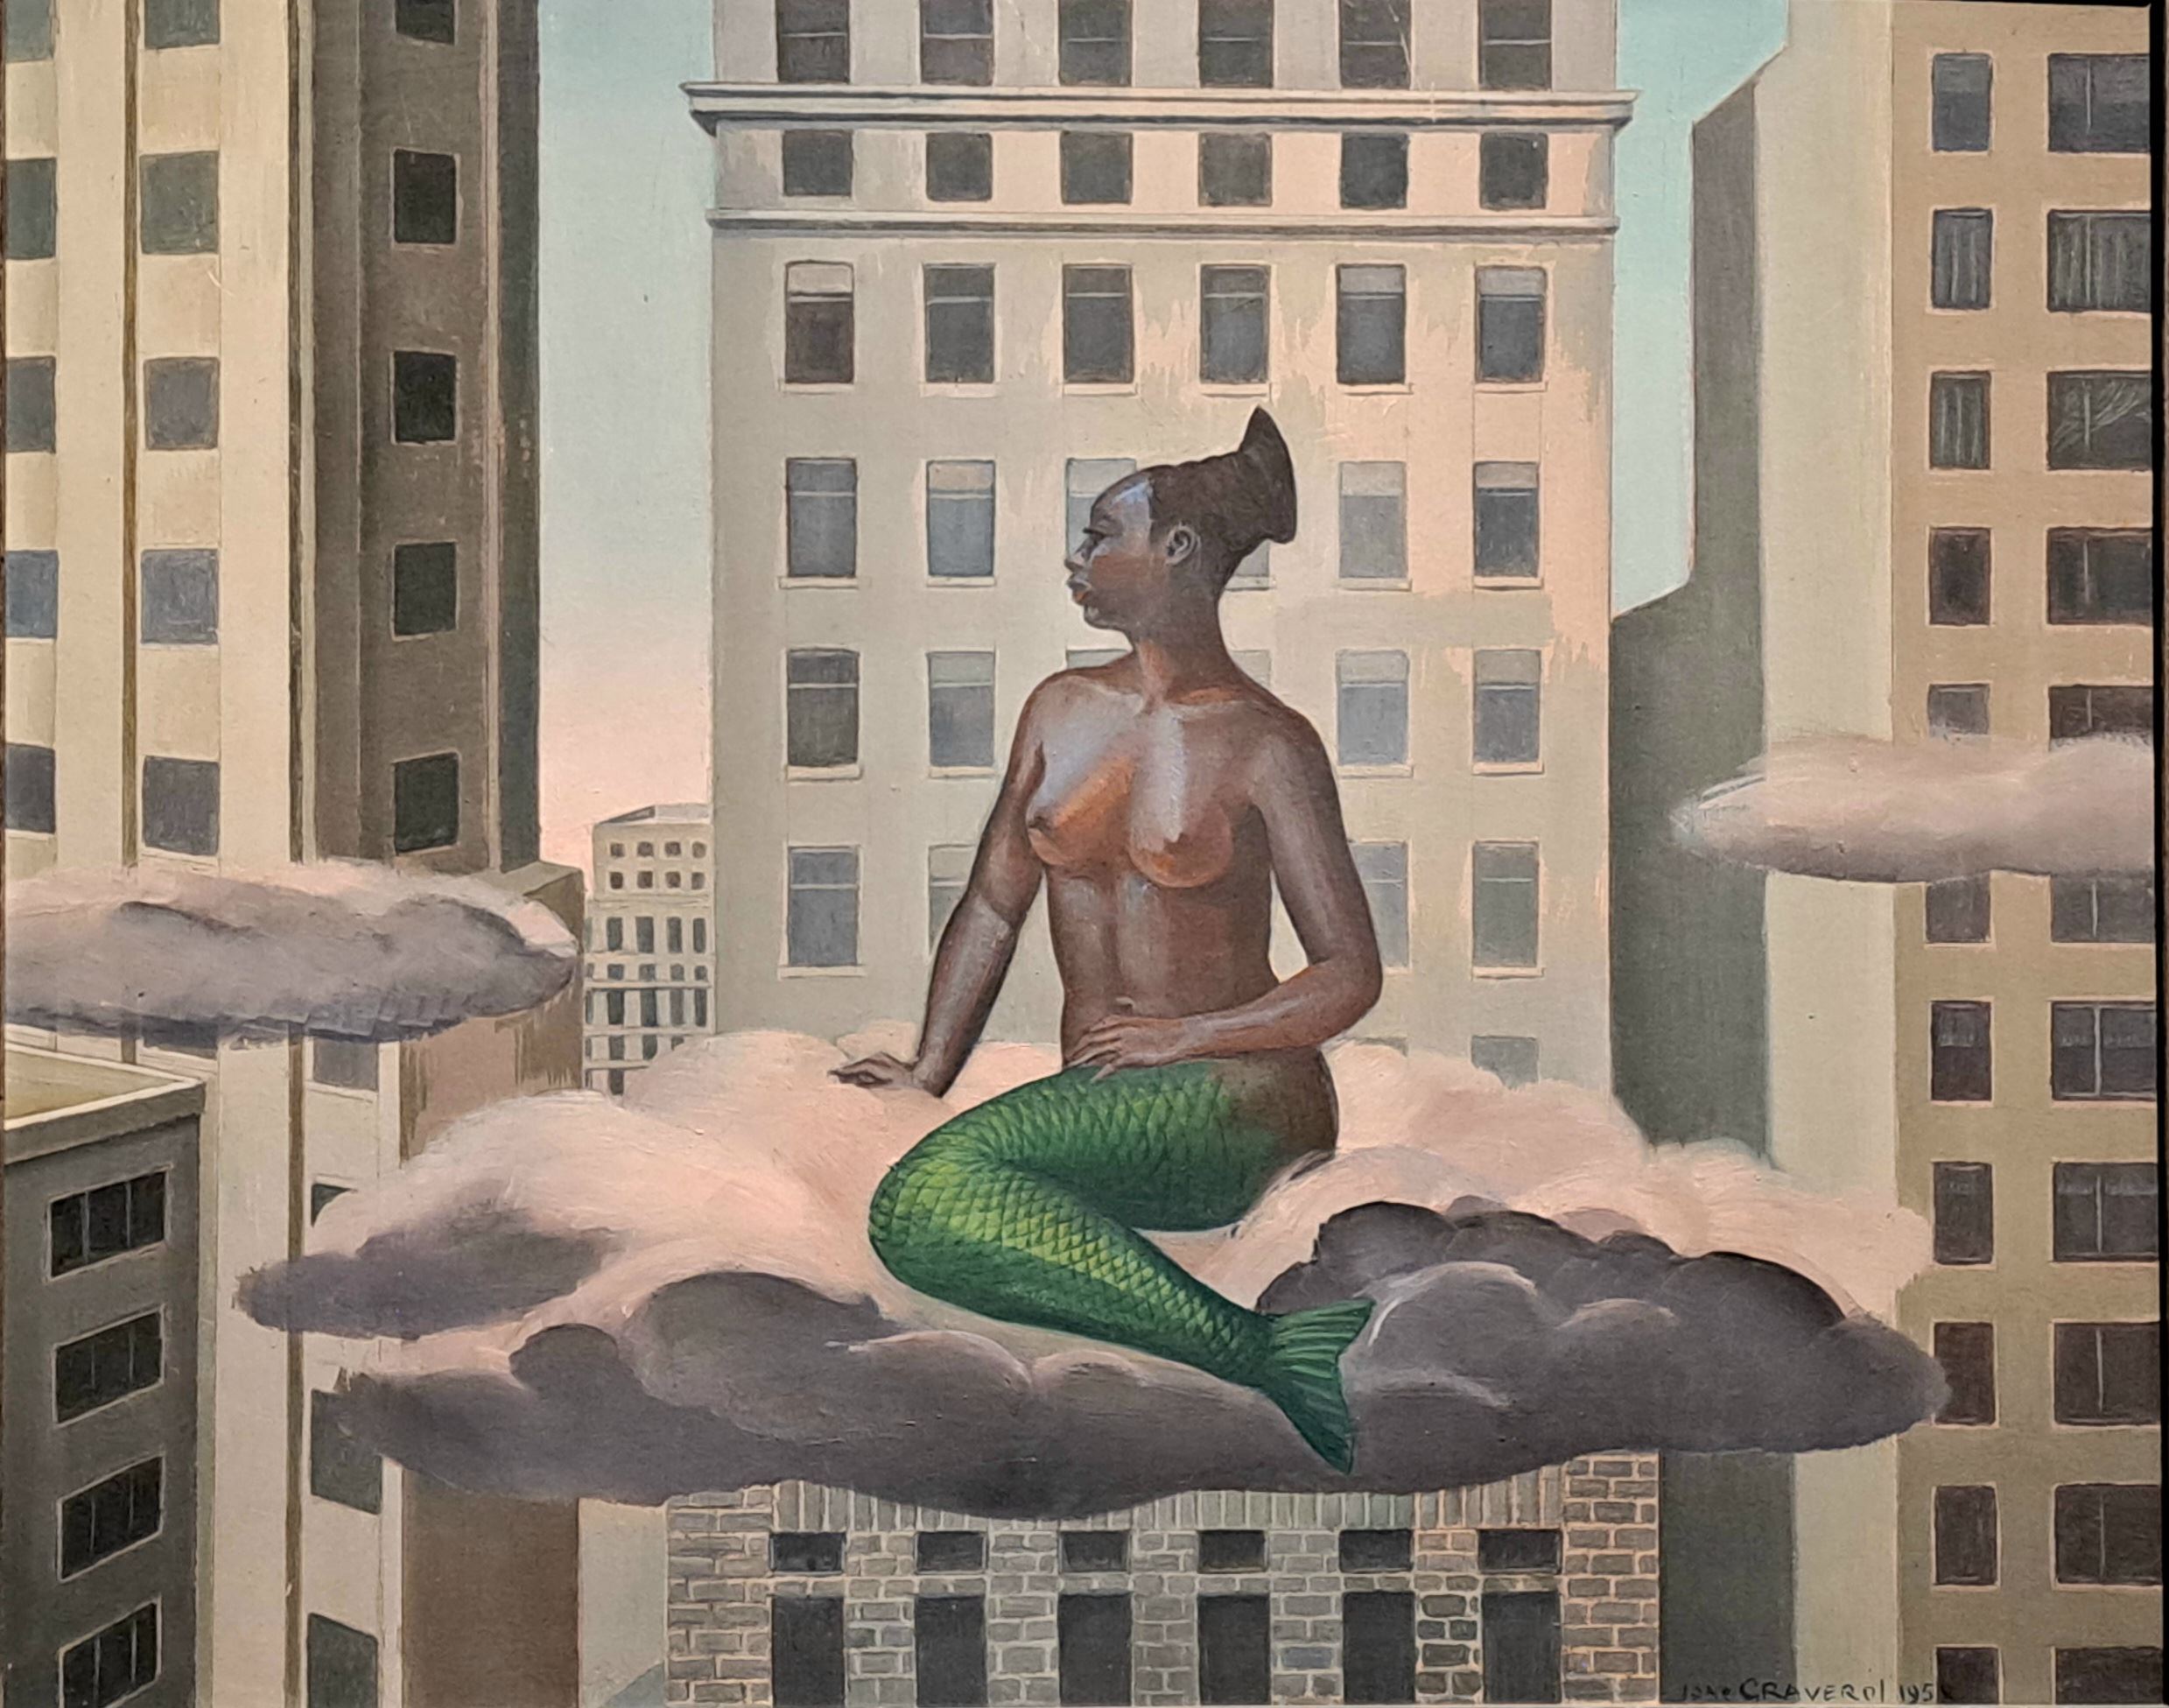 'L'Africa sconosciuta', un dipinto di Jane Graverol del 1958